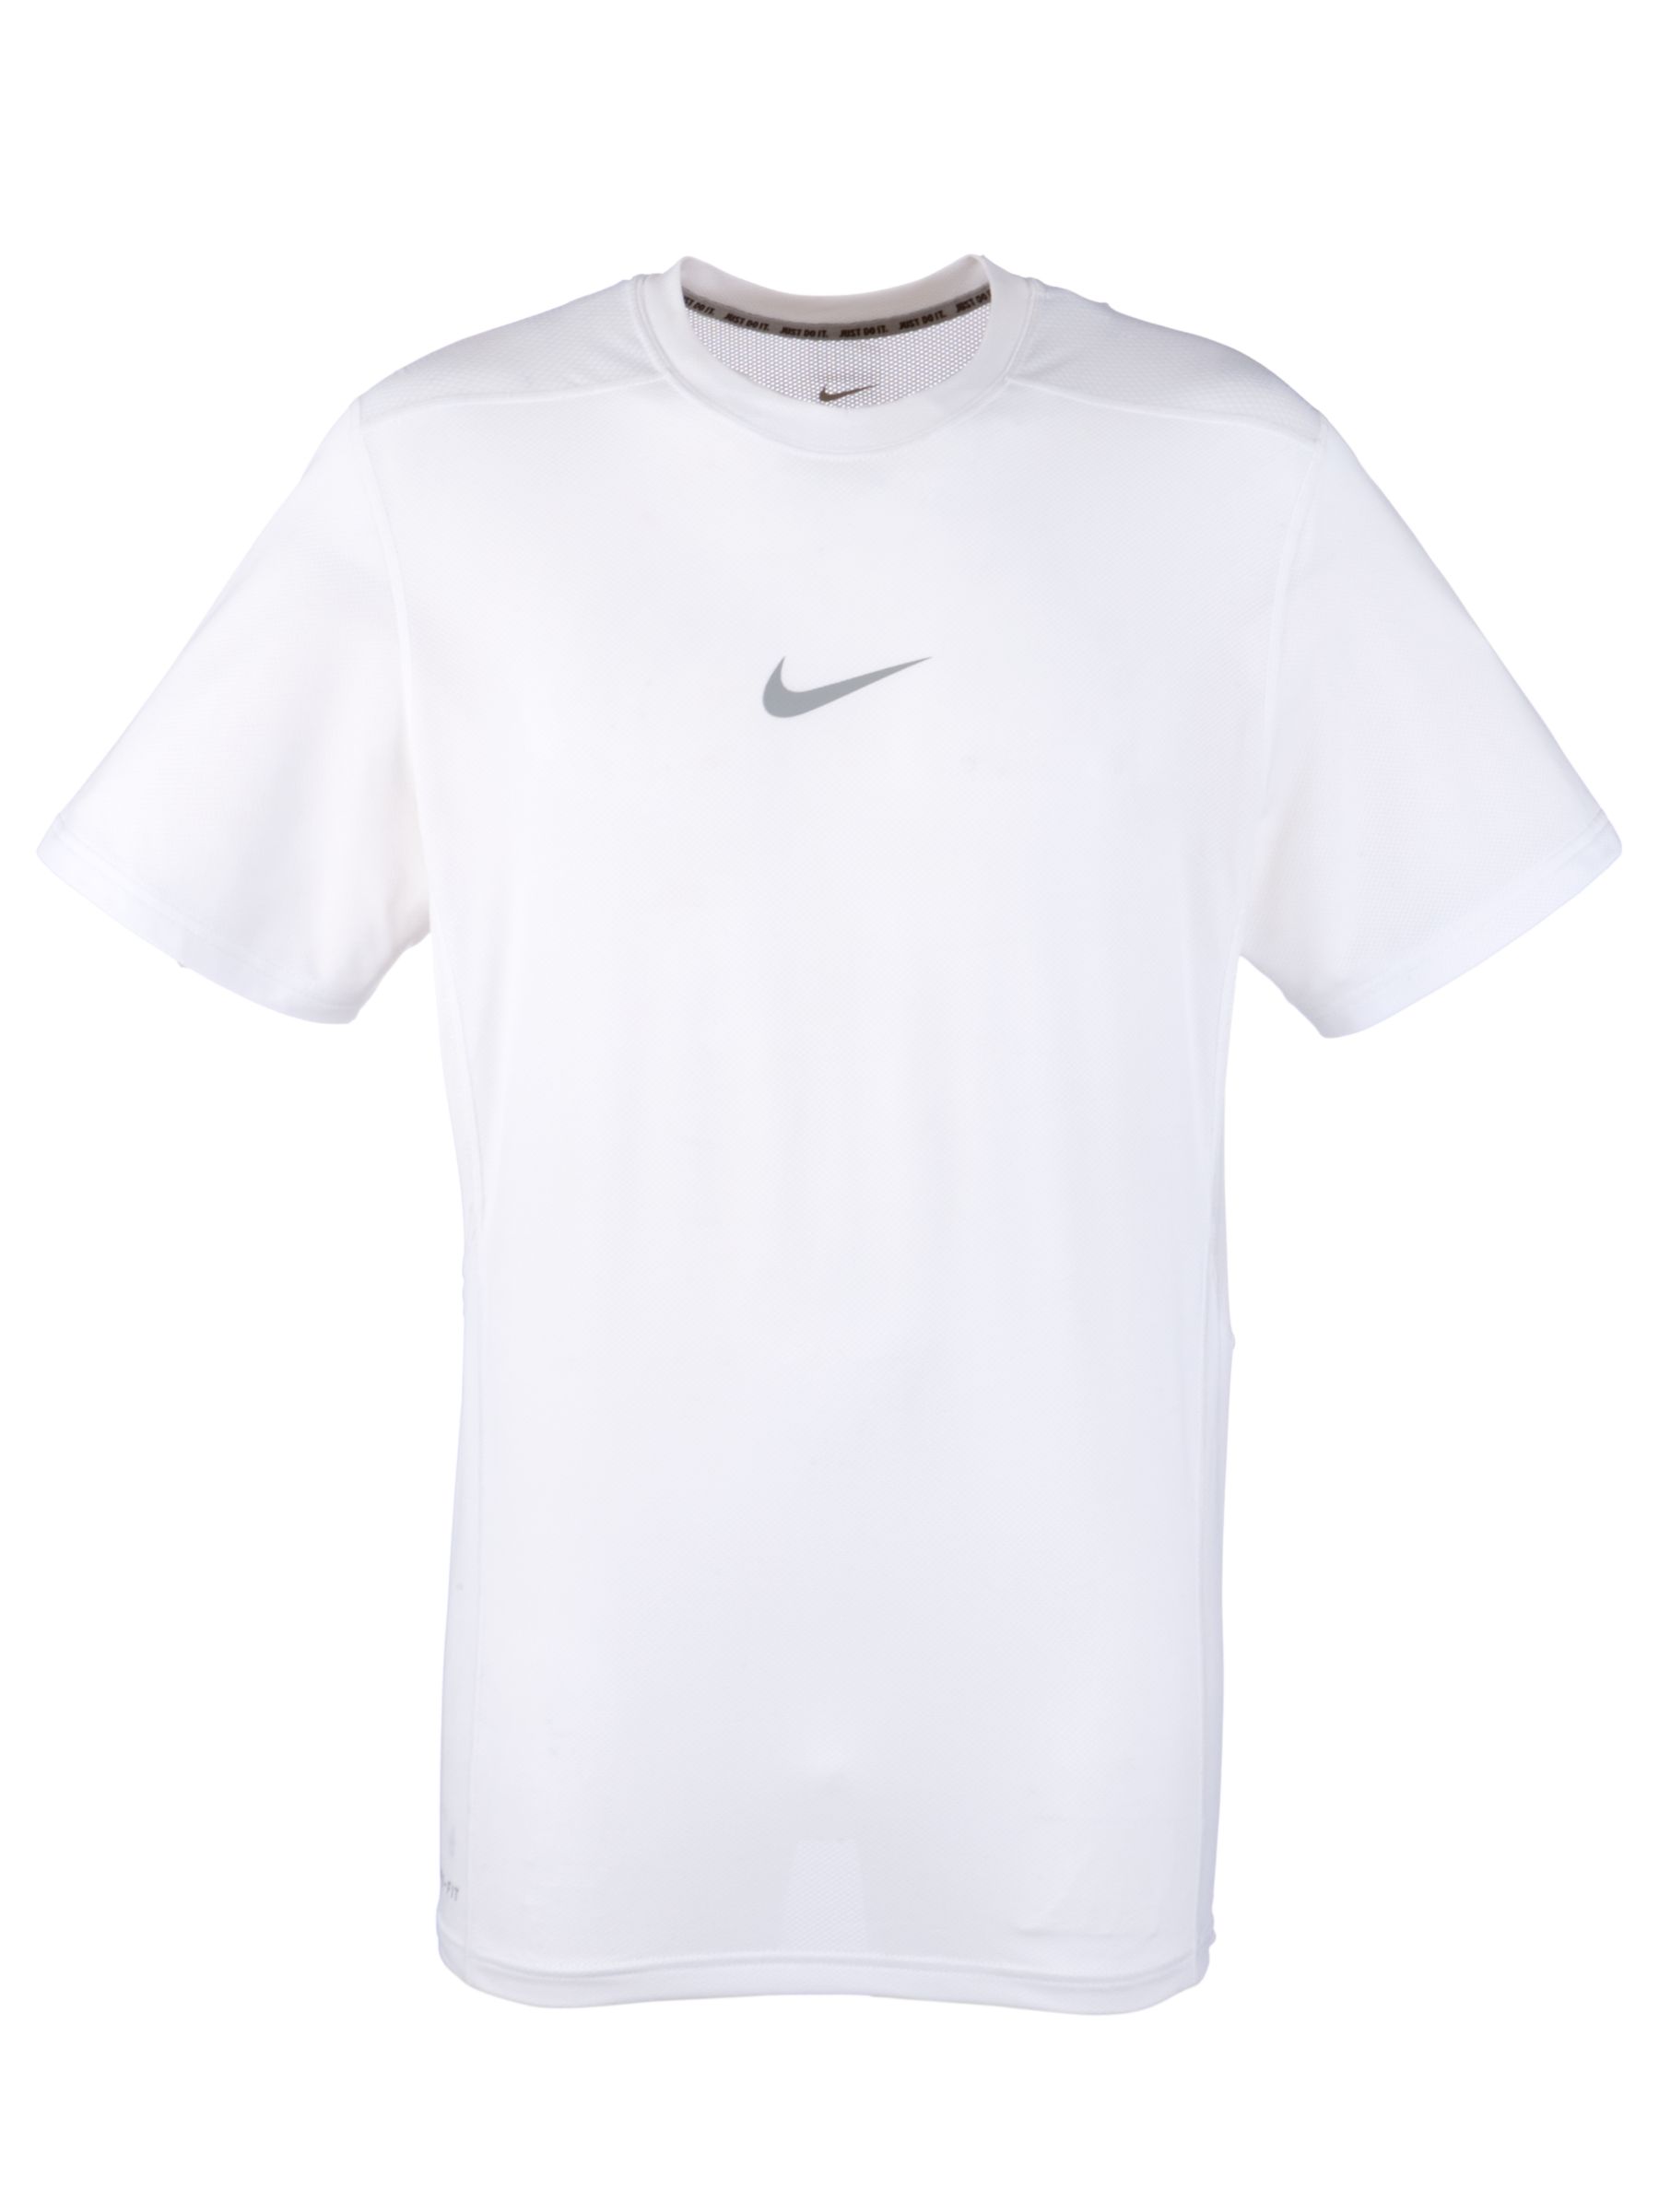 Nike Sphere Training Short Sleeve T-Shirt,